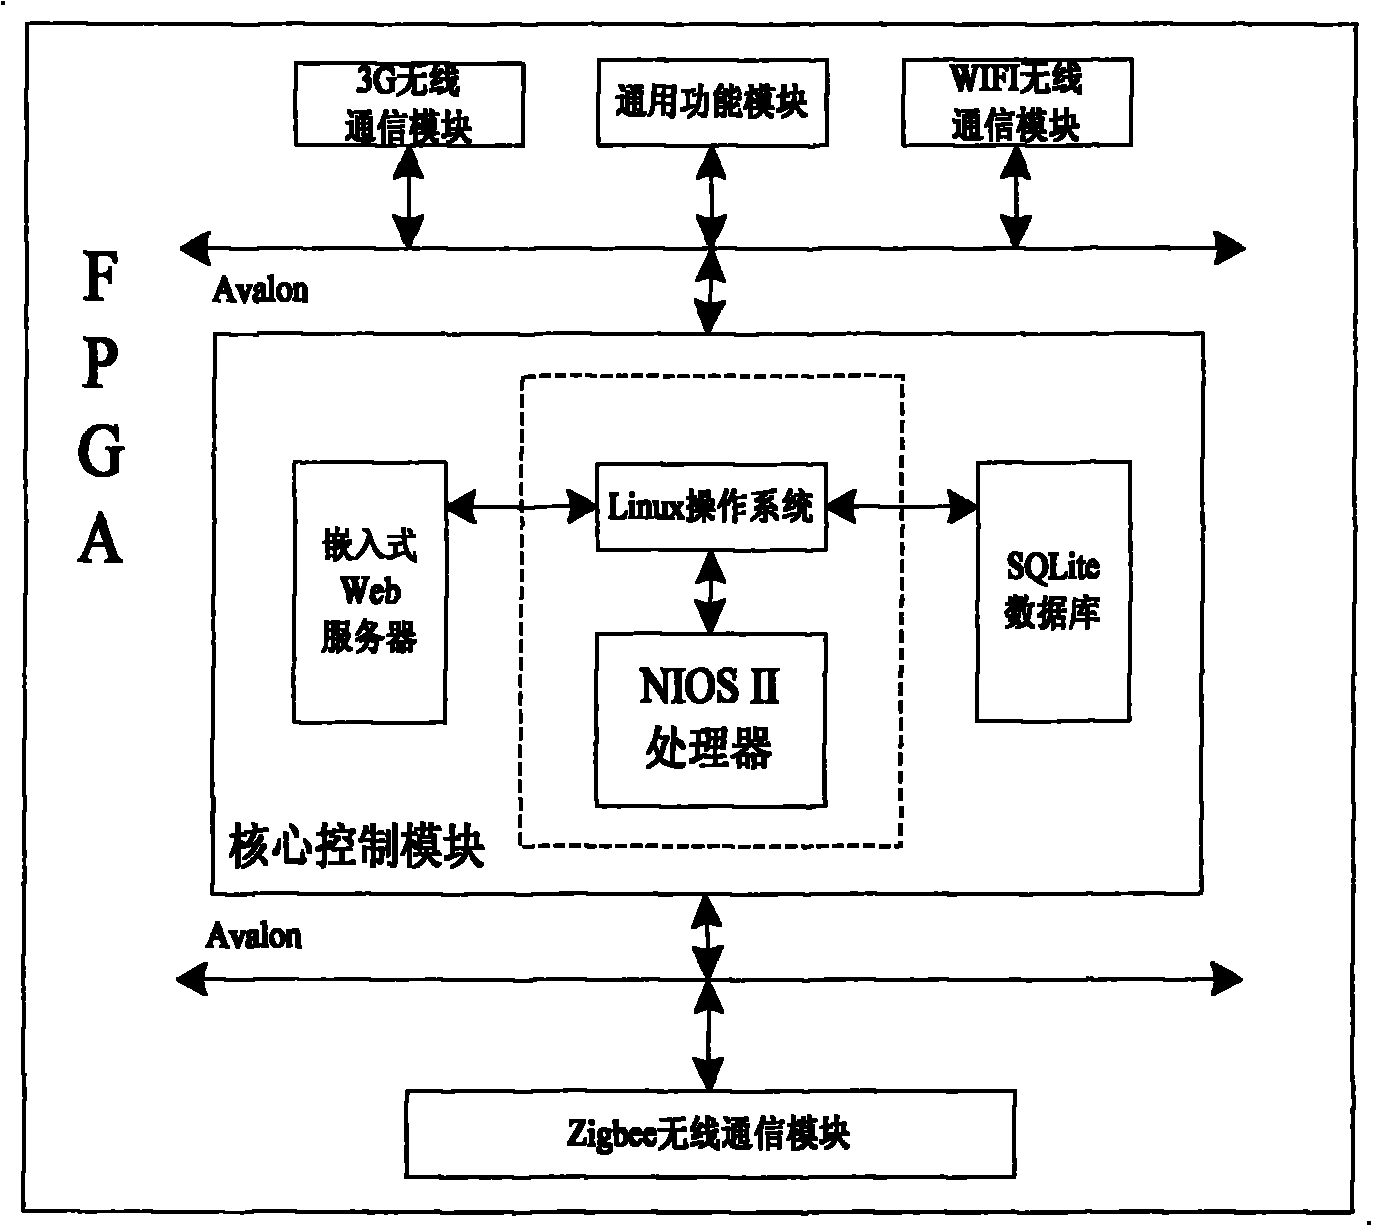 Multi-network fused FPGA (Field Programmable Gate Array) data acquisition server